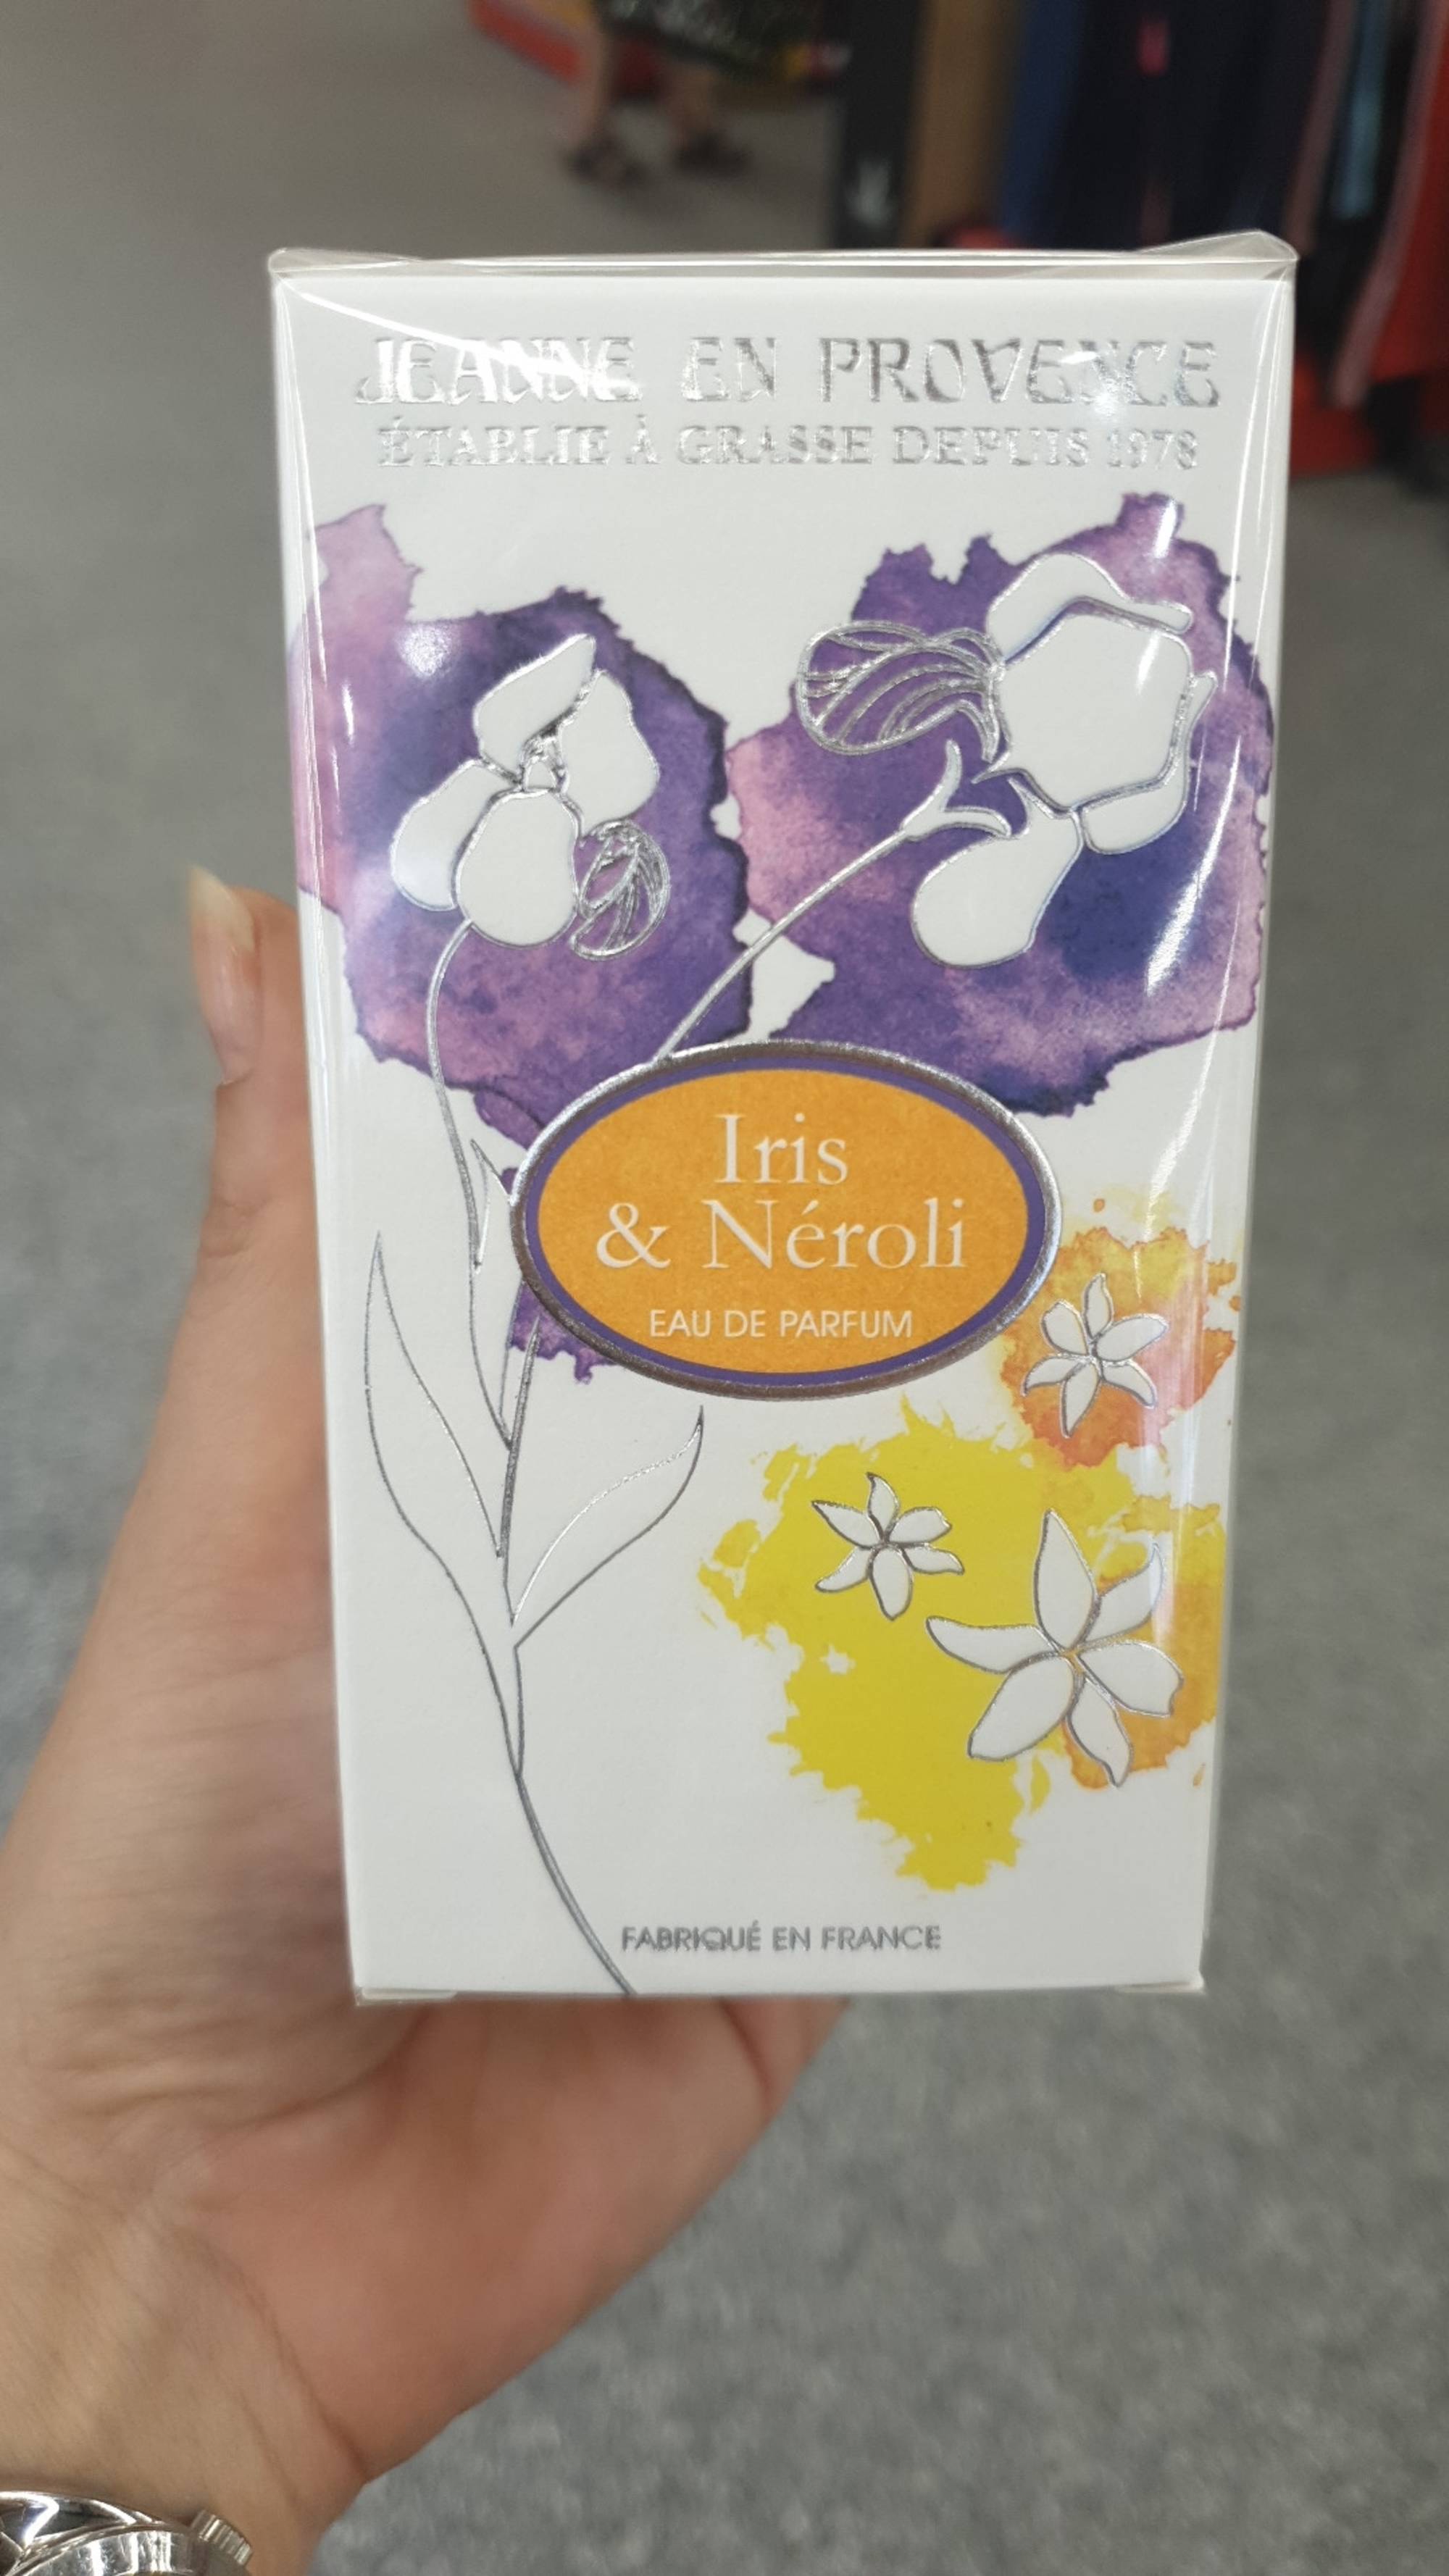 JEANNE EN PROVENCE - Iris & néroli - Eau de parfum